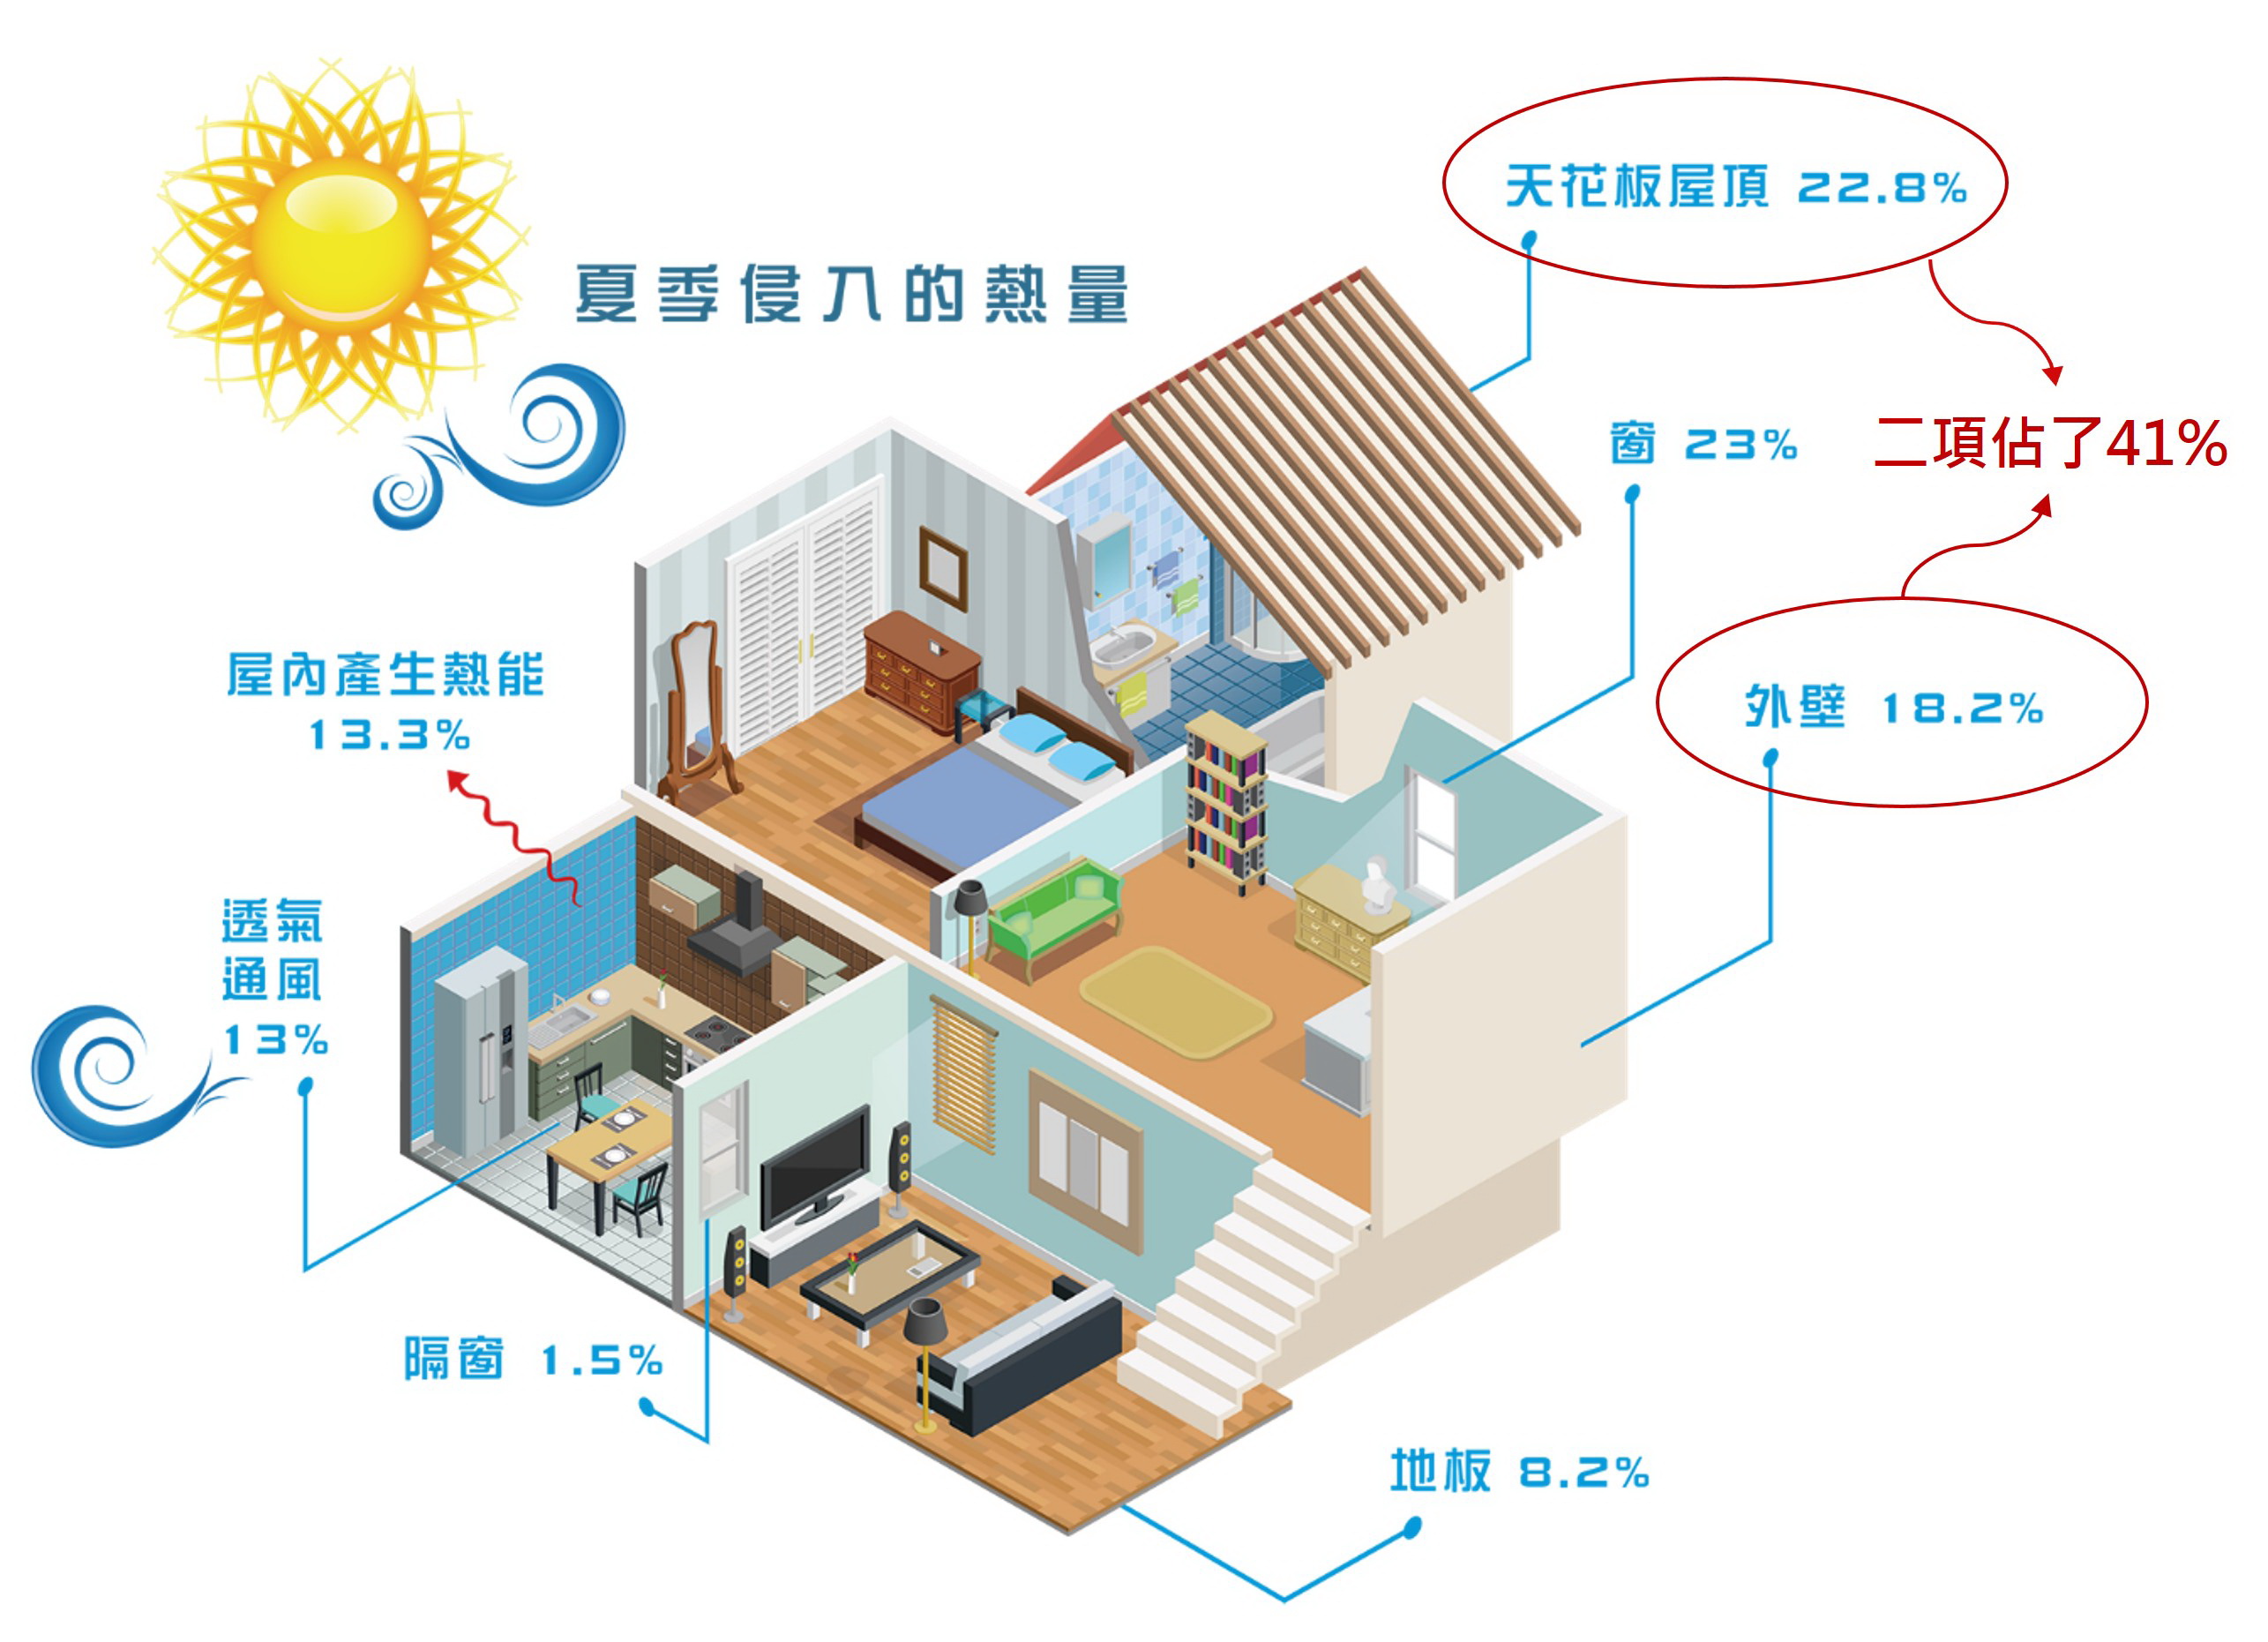 Heat conducted into houses 降低建築物能熱能能耗(綠建築)